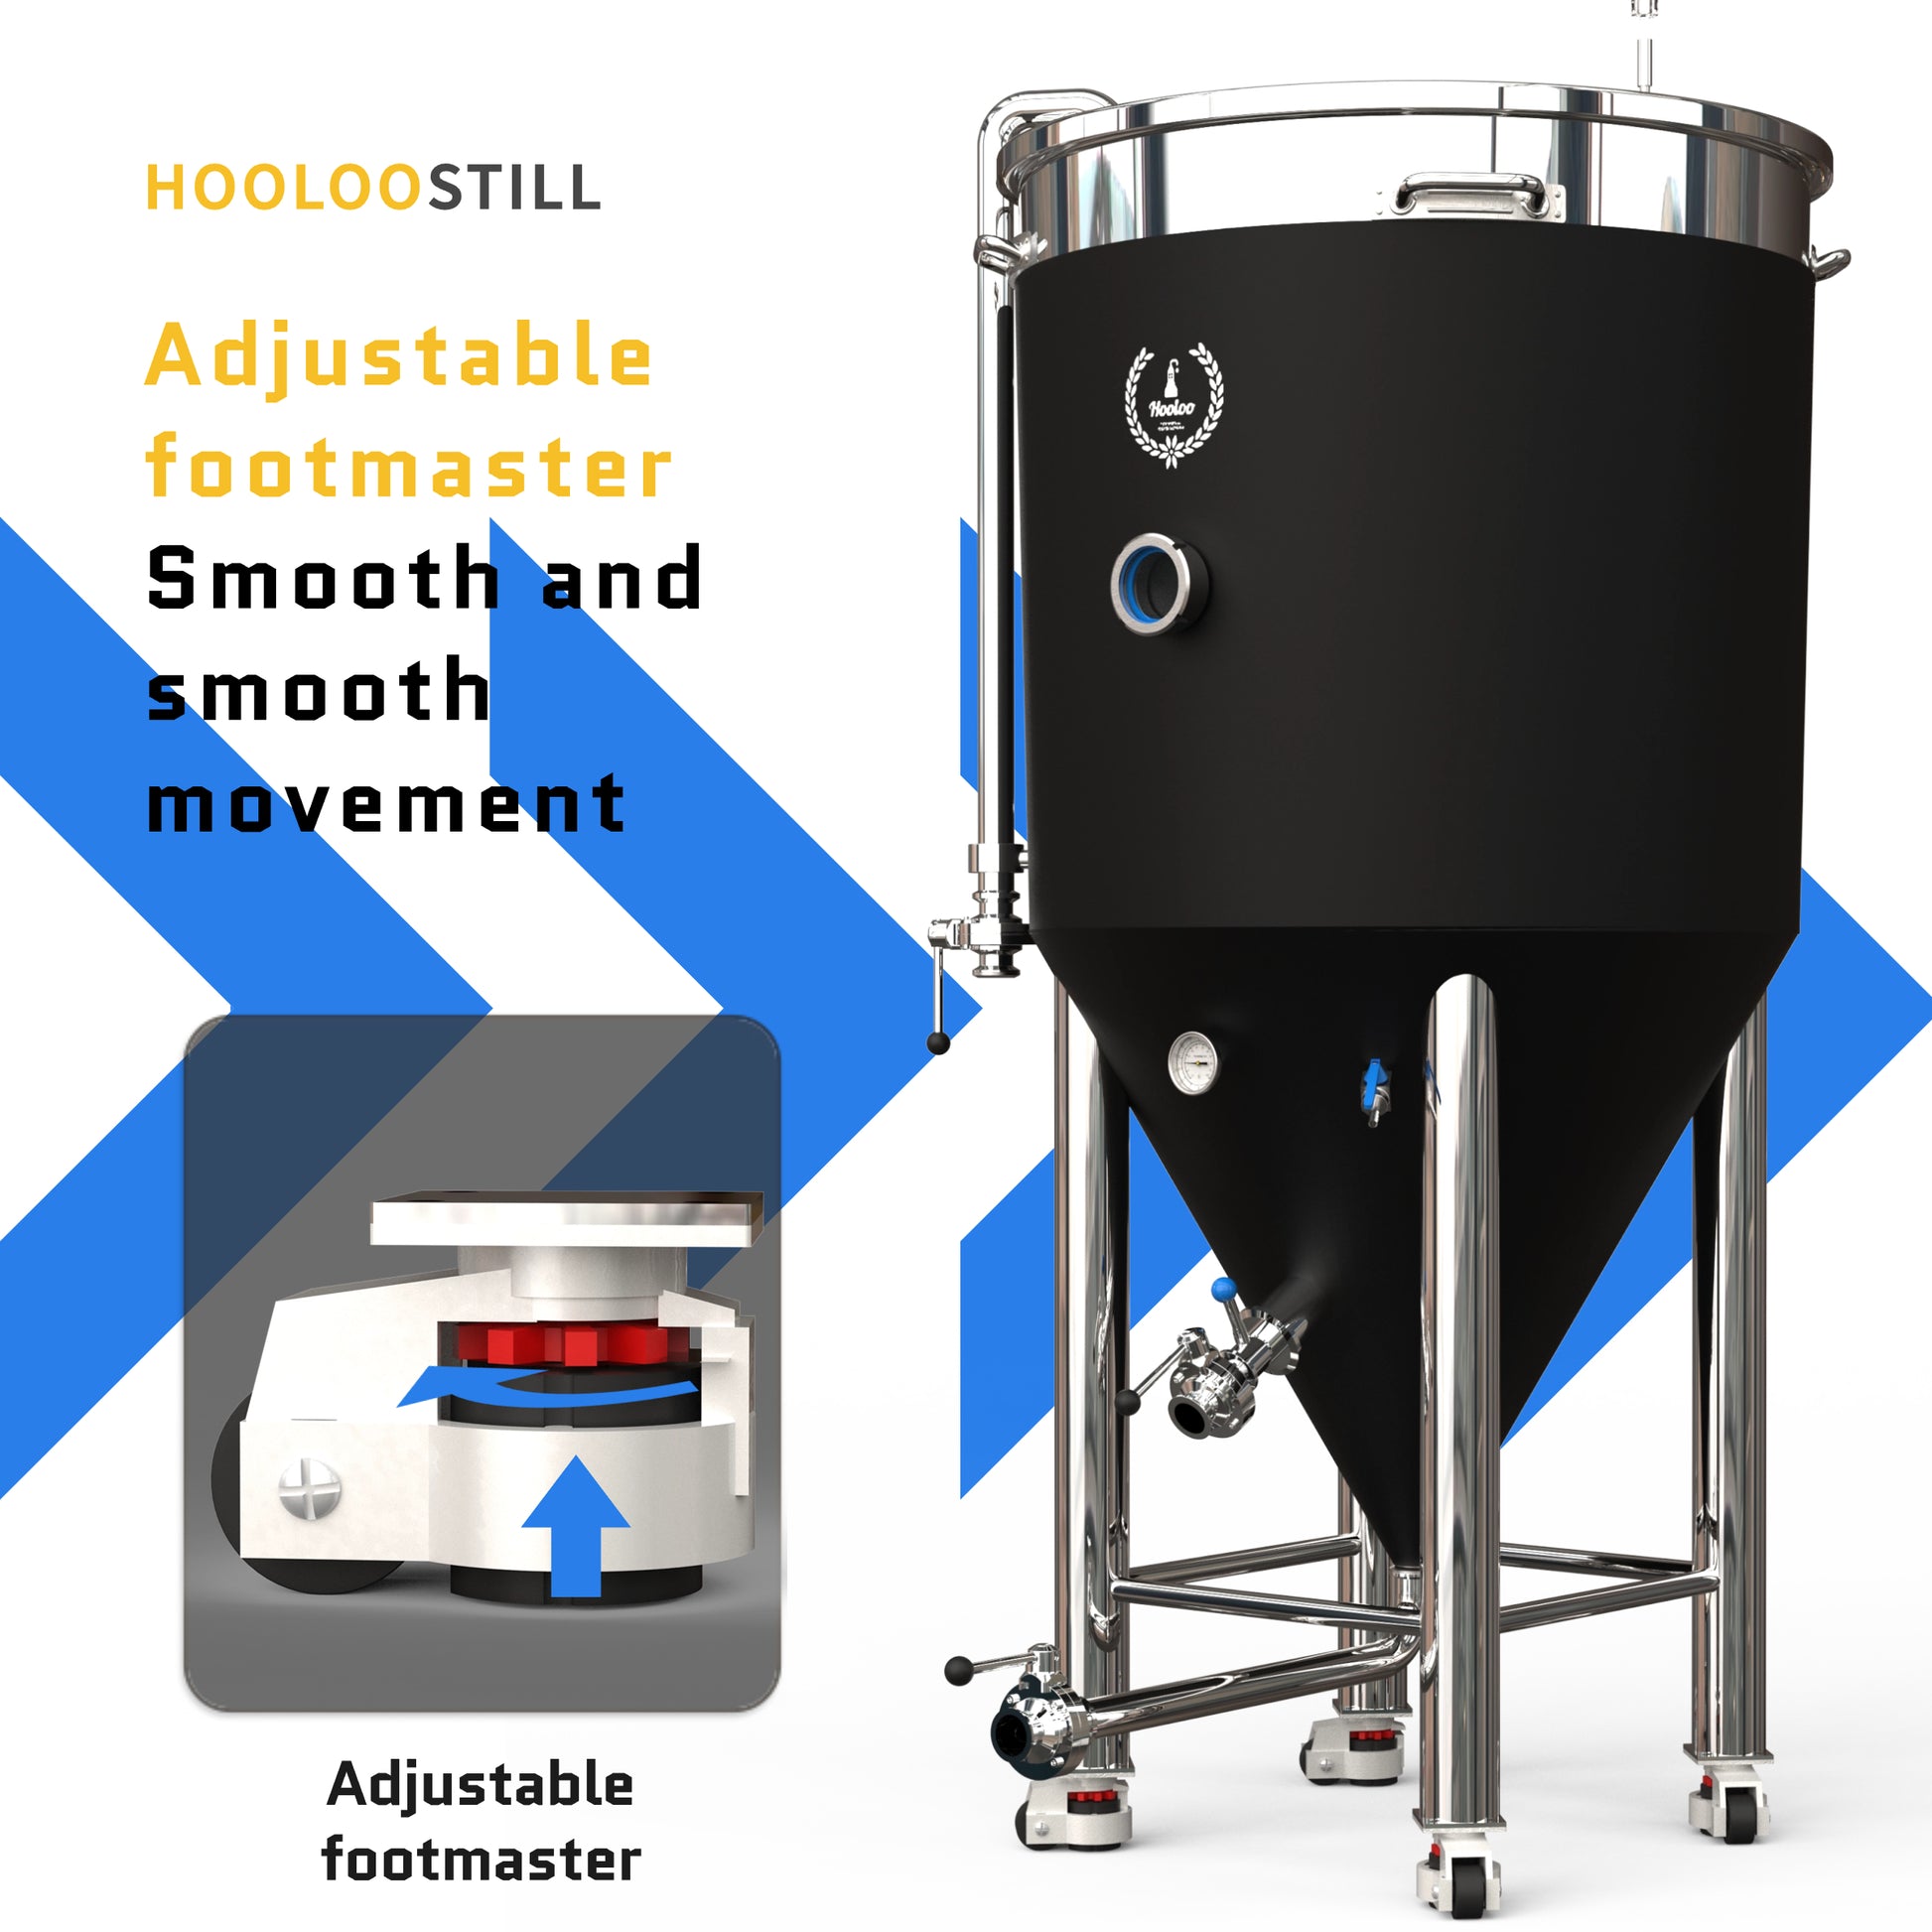 500L /130Gal Single Layer Fermenter Brewing Equipment Fermentor - Hooloo Distilling Equipment Supply